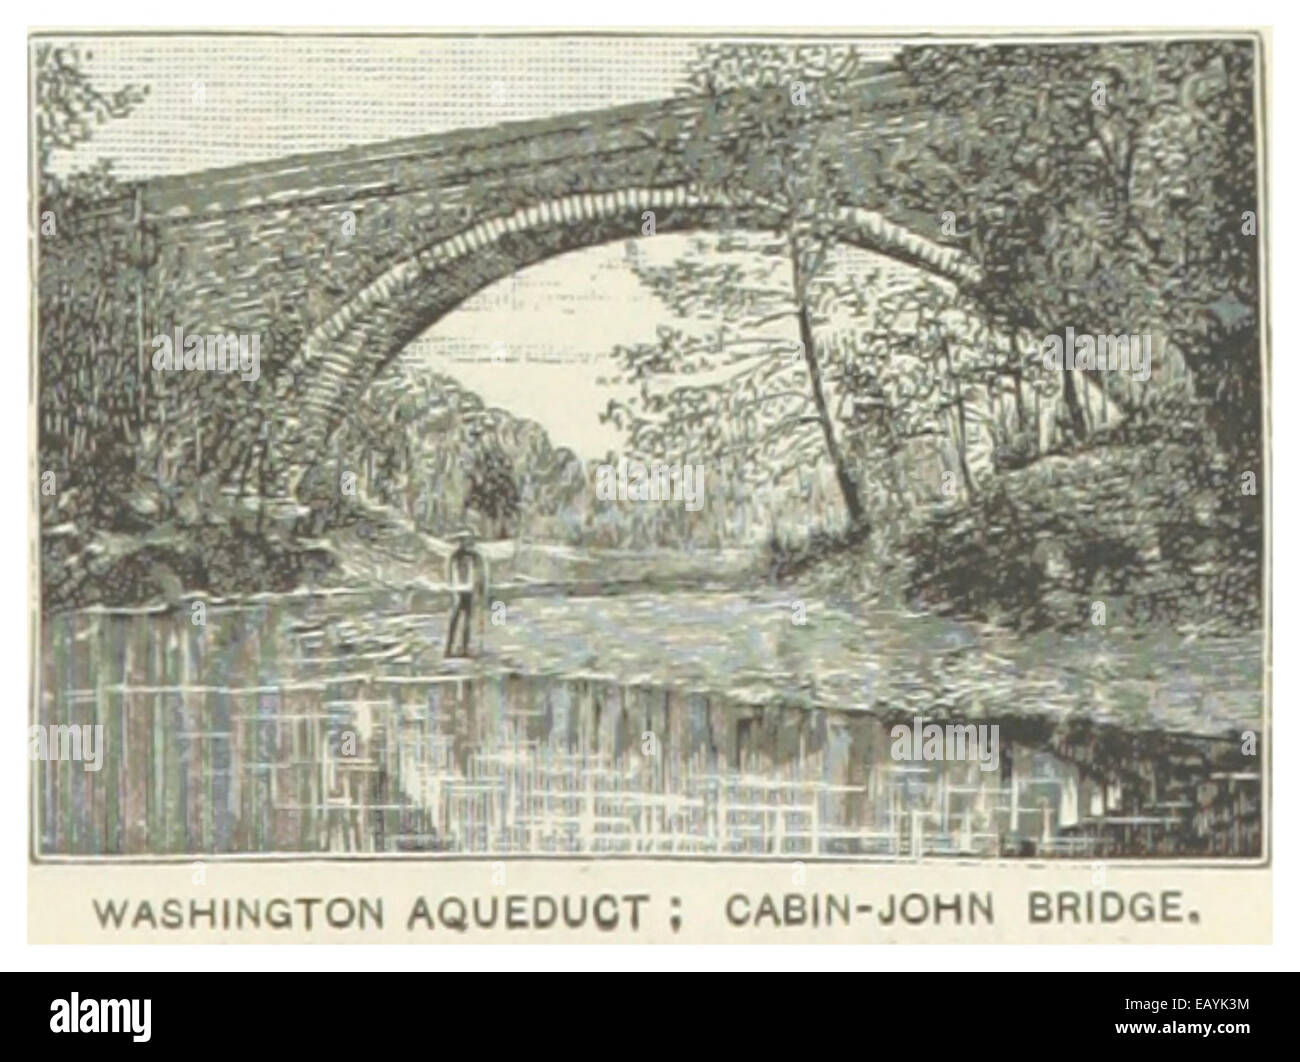 US-MD(1891) p325 CABIN-JOHN BRIDGE OF THE WASHINGTON AQUAEDUCT Stock Photo